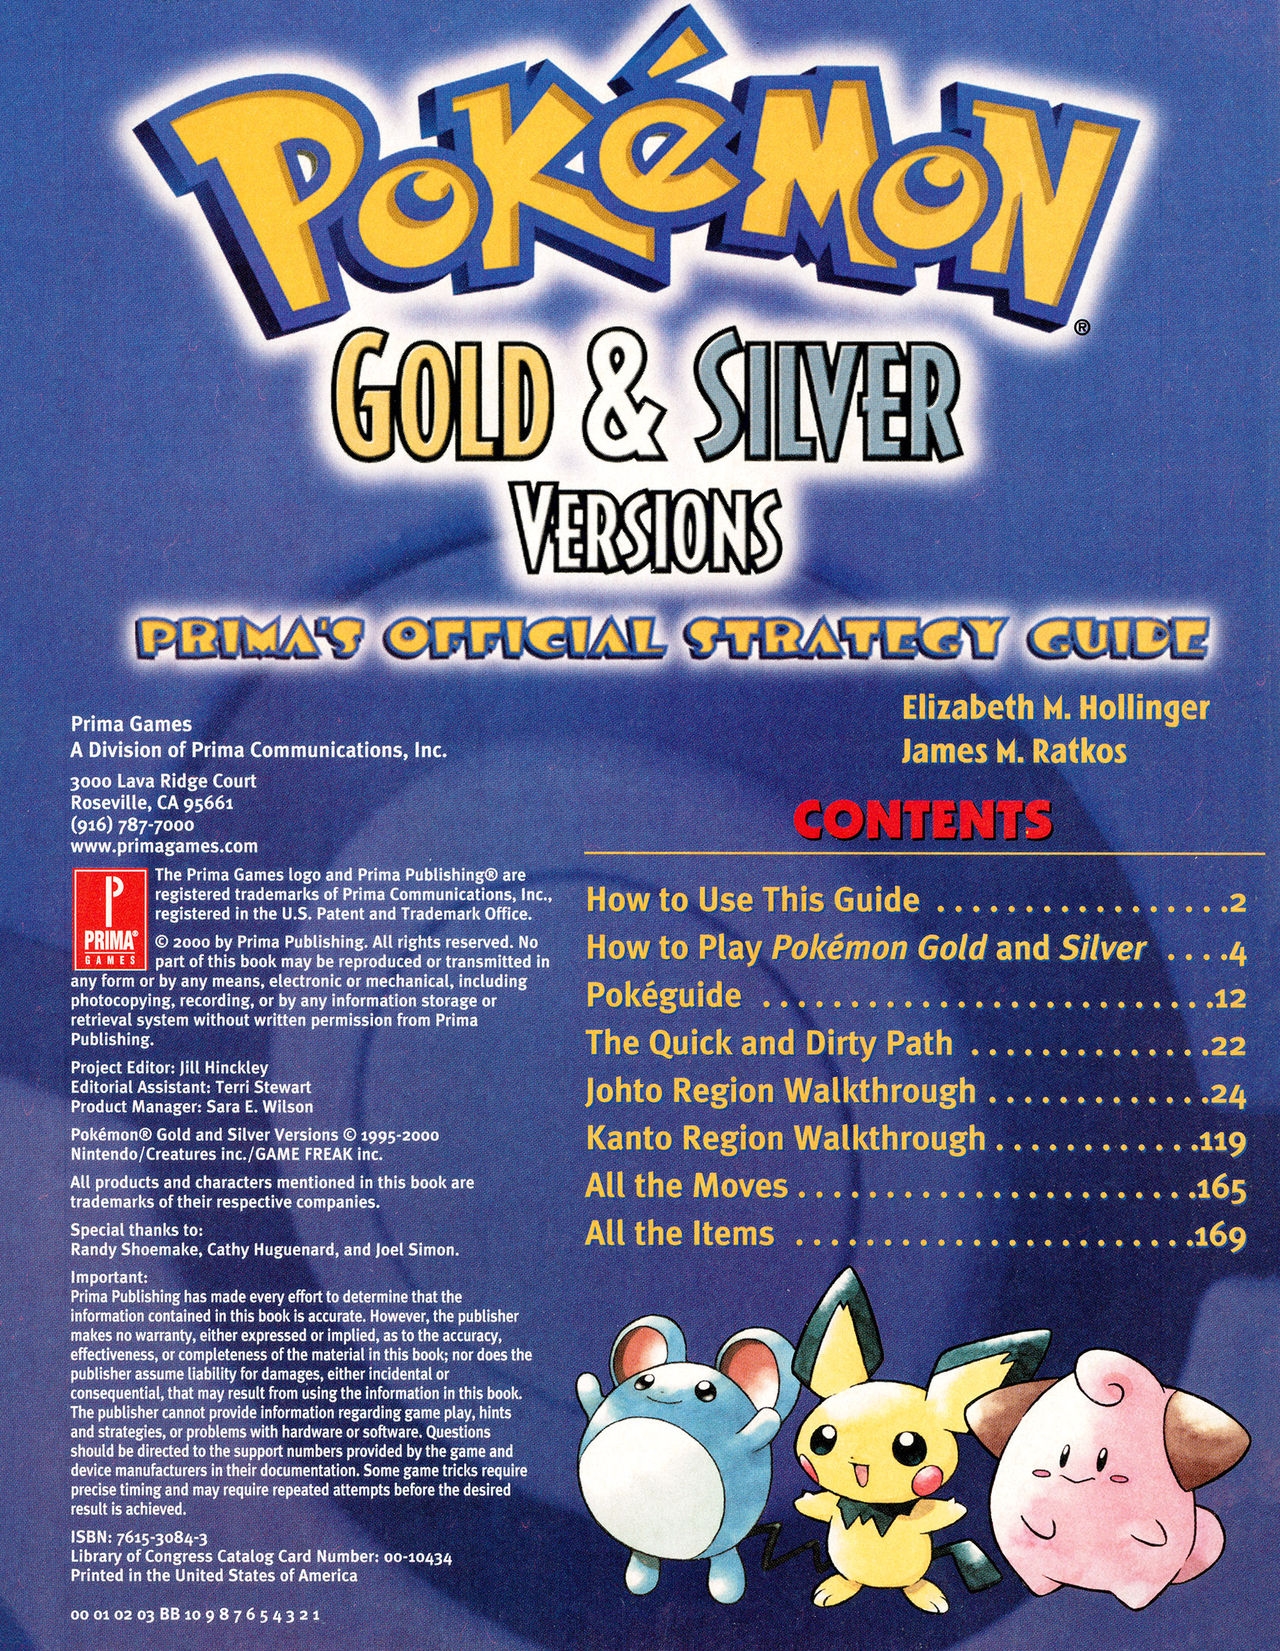 Pokémon Gold & Silver Versions - Strategy Guide 2